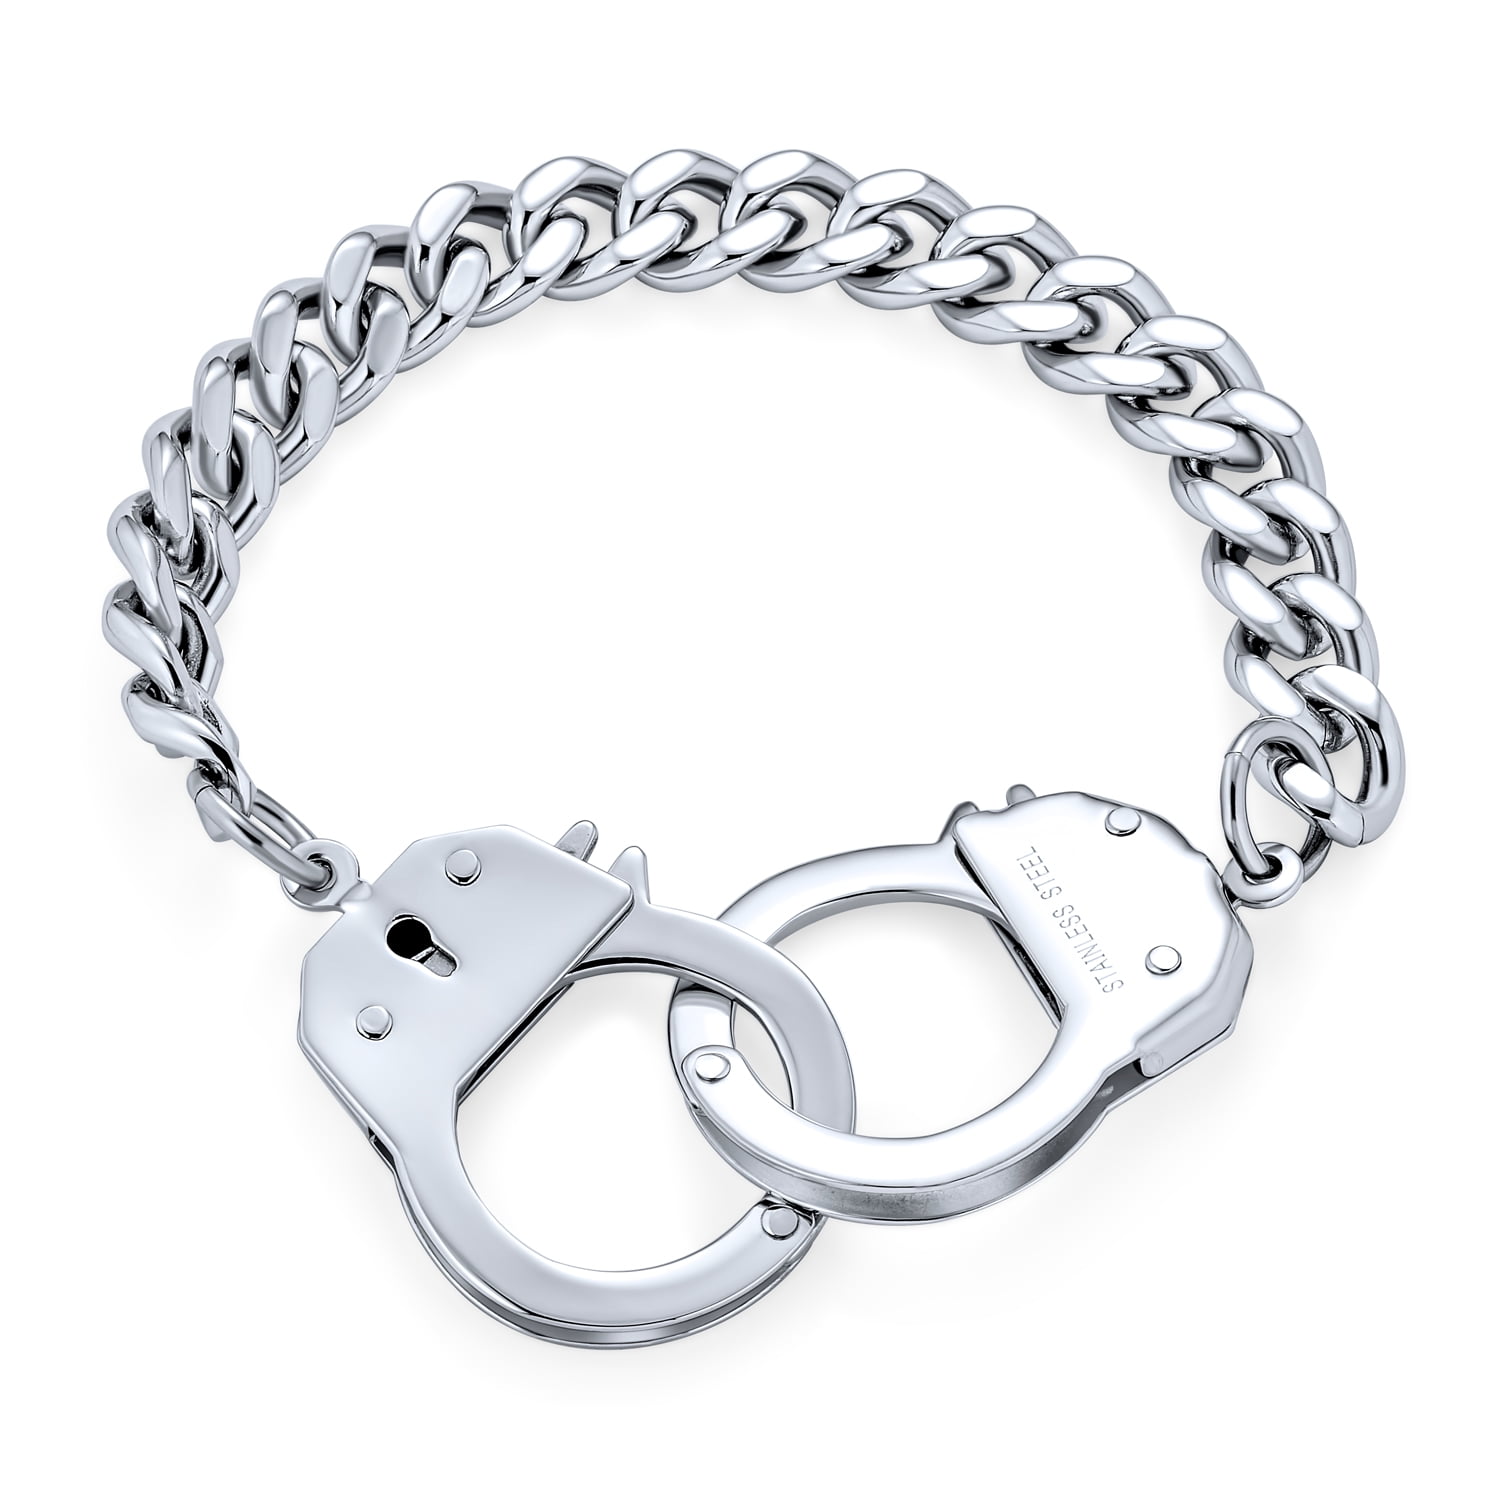 Necklace Set Trendy Fashion Silver Plated Unisex Handcuffs Pendant Bracelet